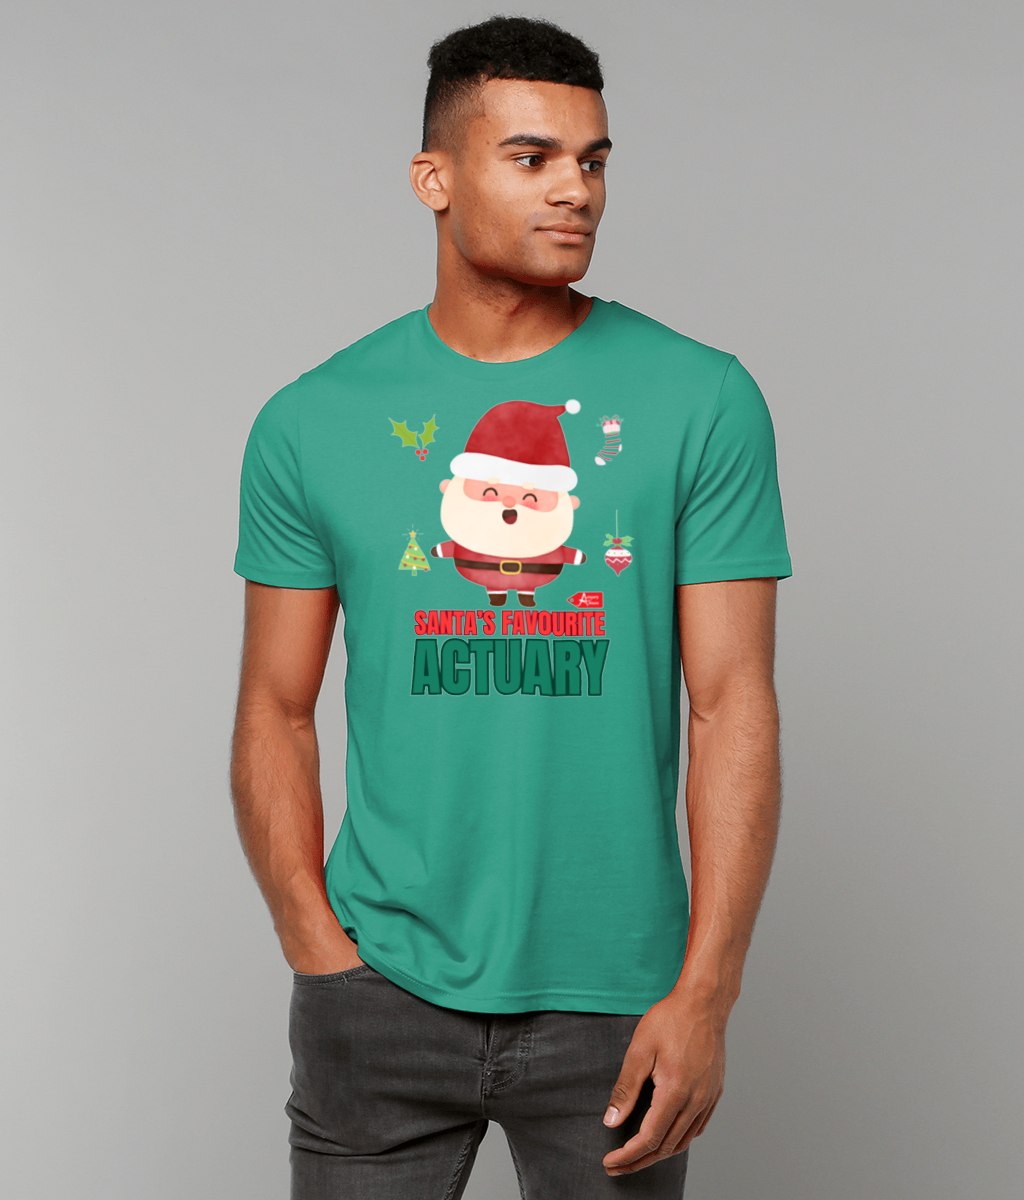 Santa's Favourite Actuary Christmas Happy Santa T-Shirt (Green and White Variations)